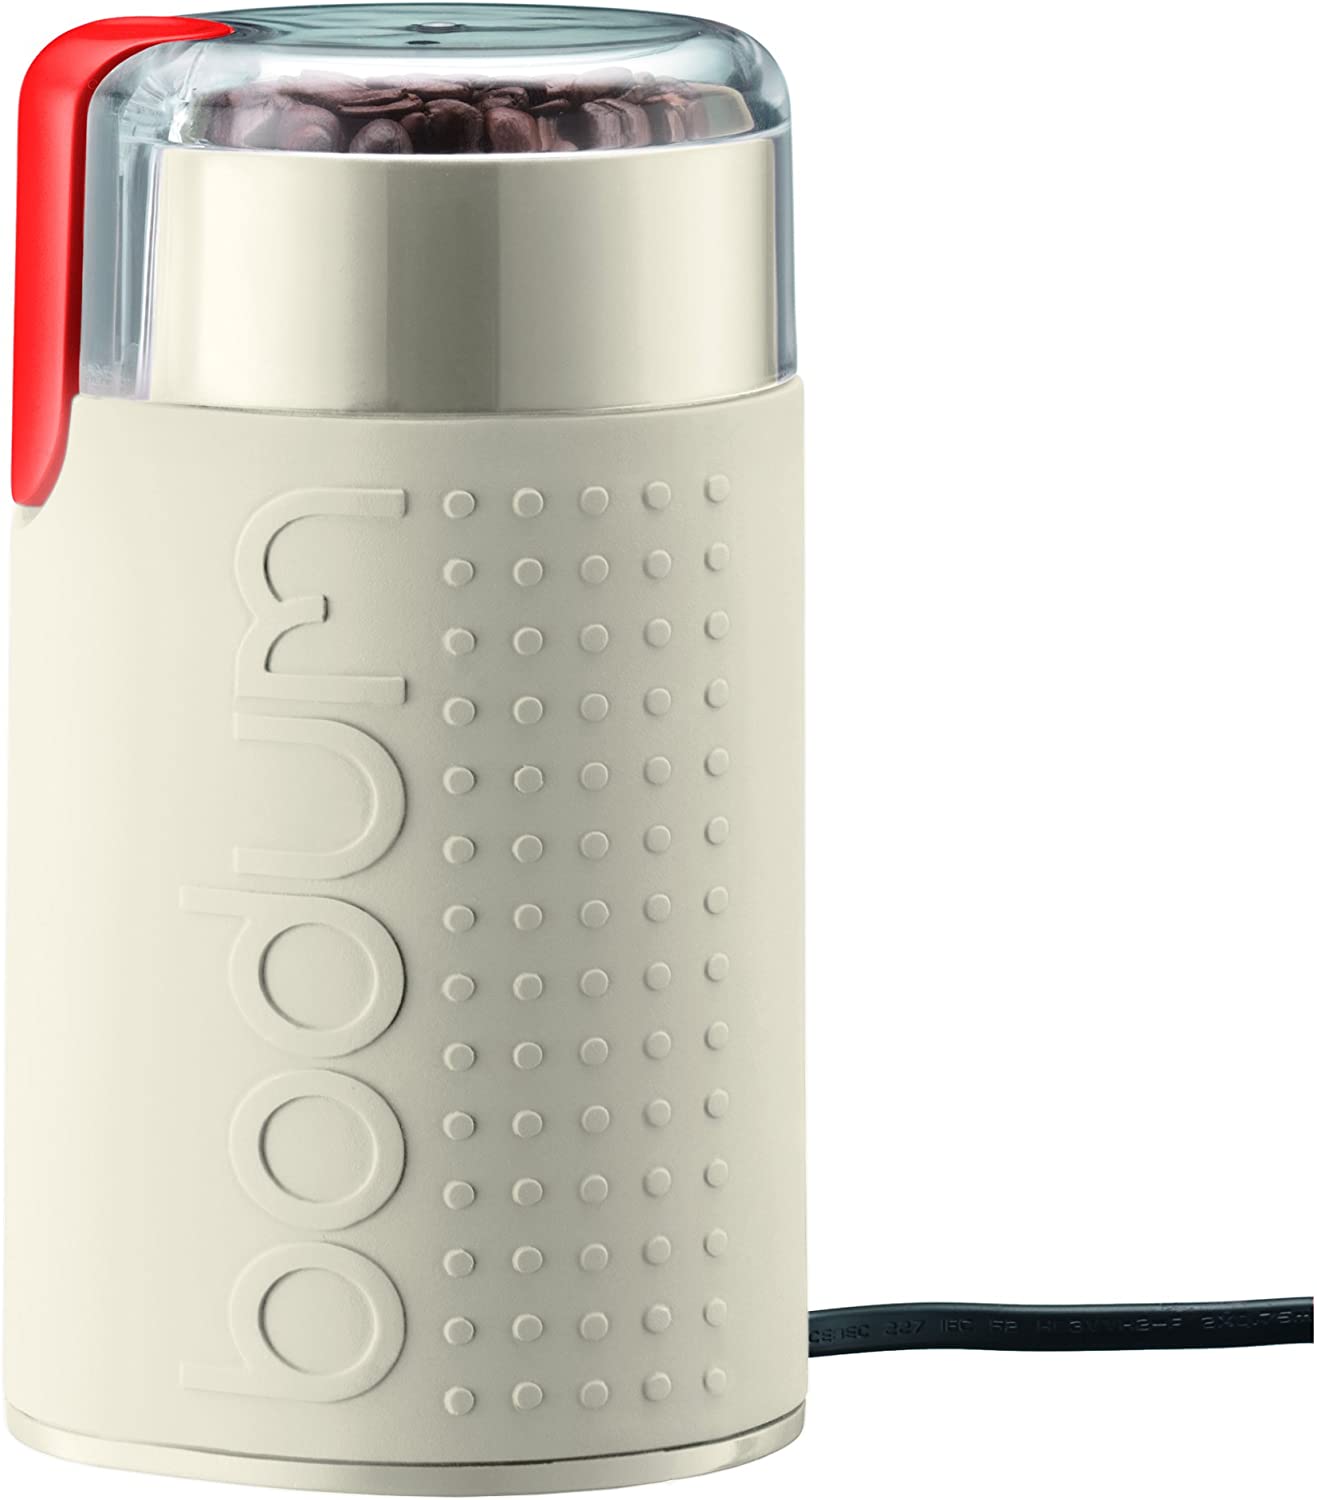 Bodum 11160-913EURO-3 Bistro Electric Coffee Grinder, Plastic, White